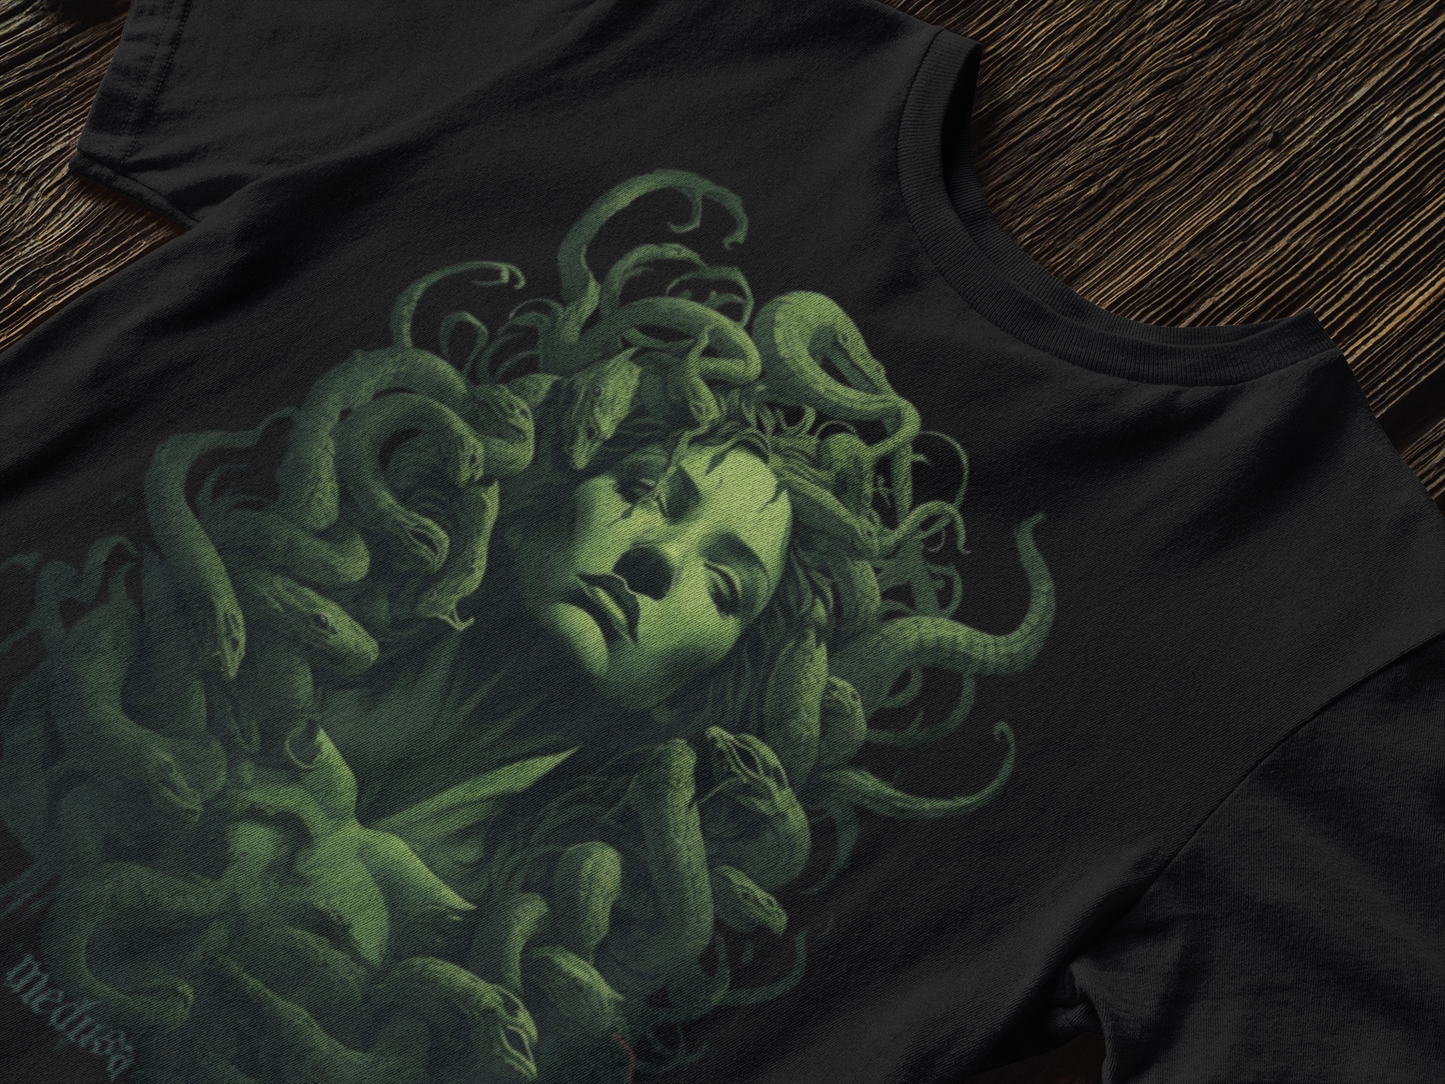 Medusa's Visage T-shirt by Hellhound Clothing